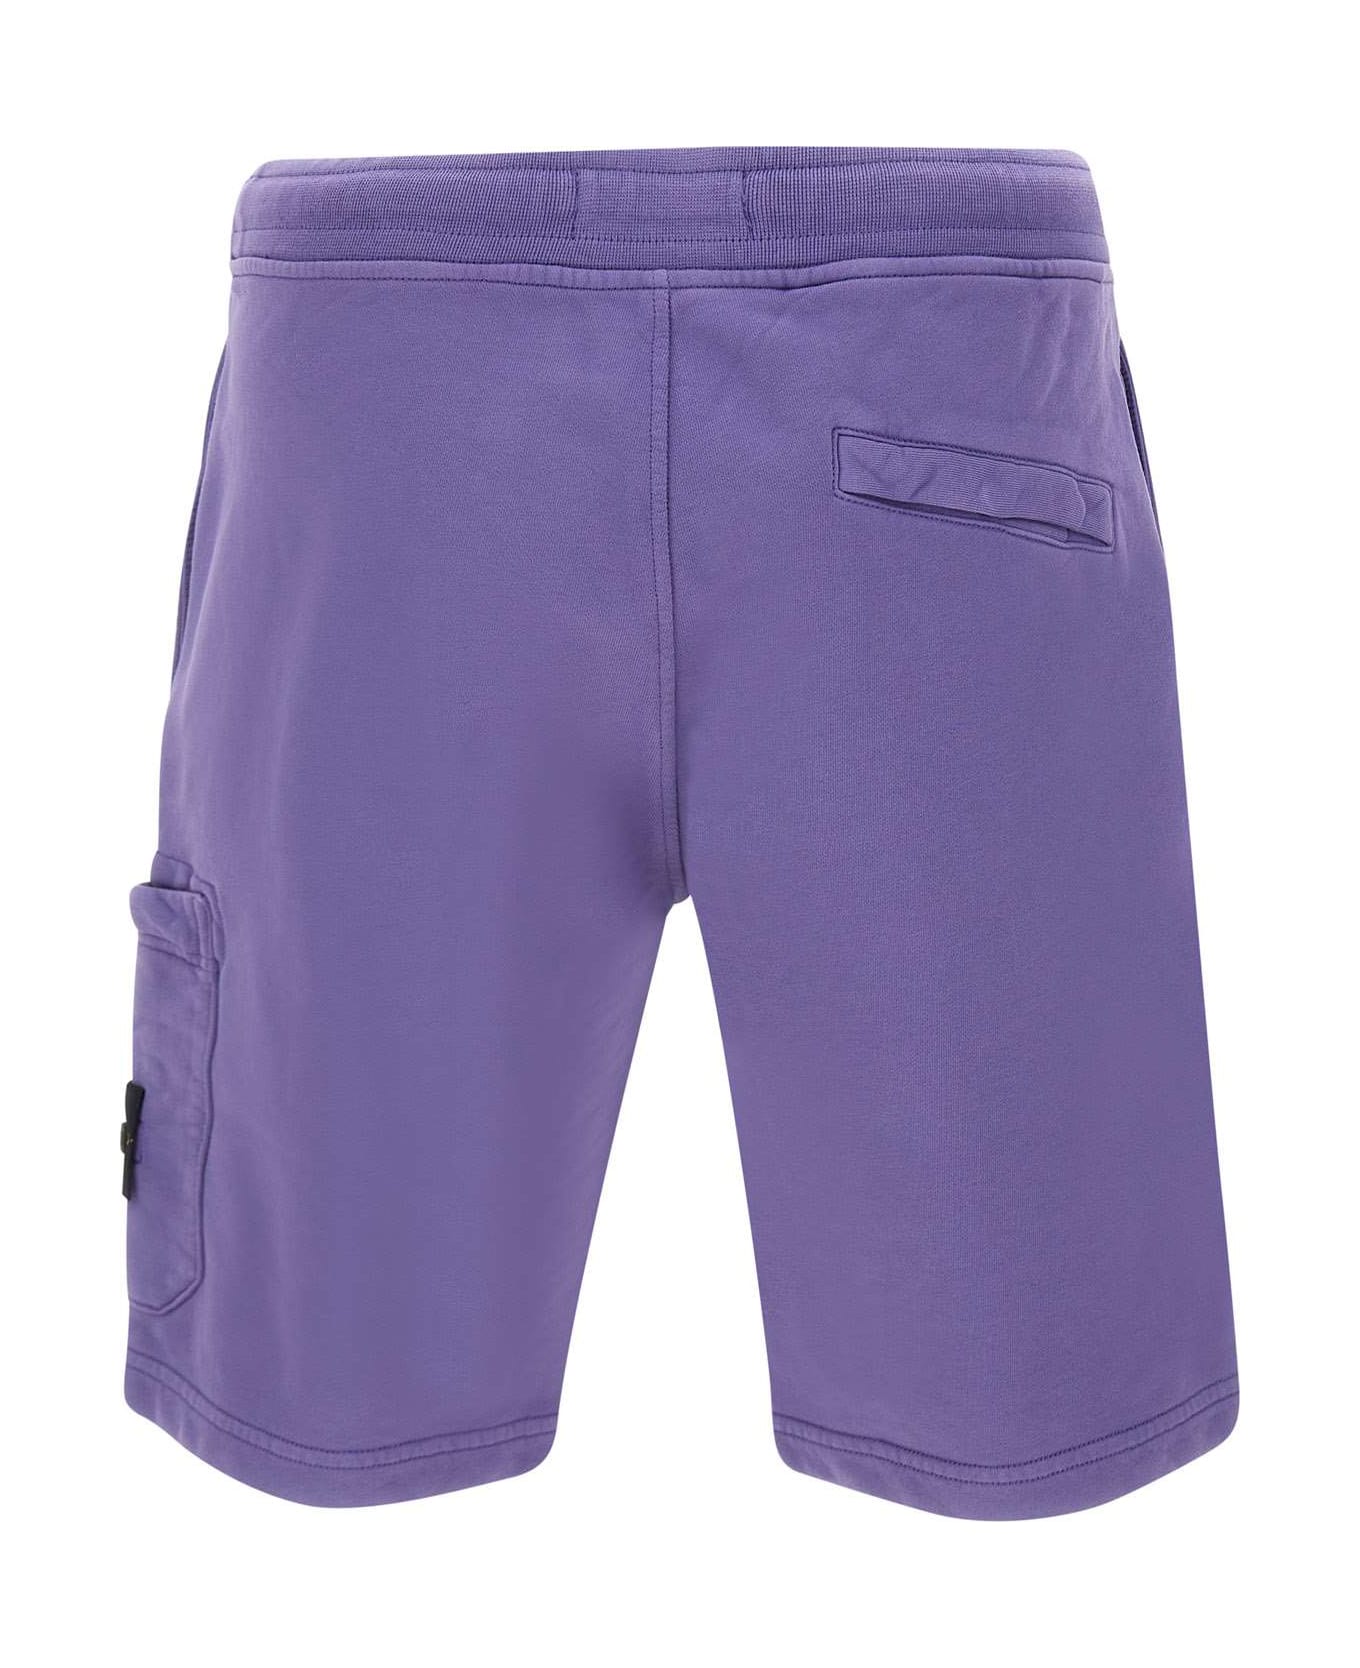 Stone Island Felpa Bermuda Shorts - LILAC ショートパンツ